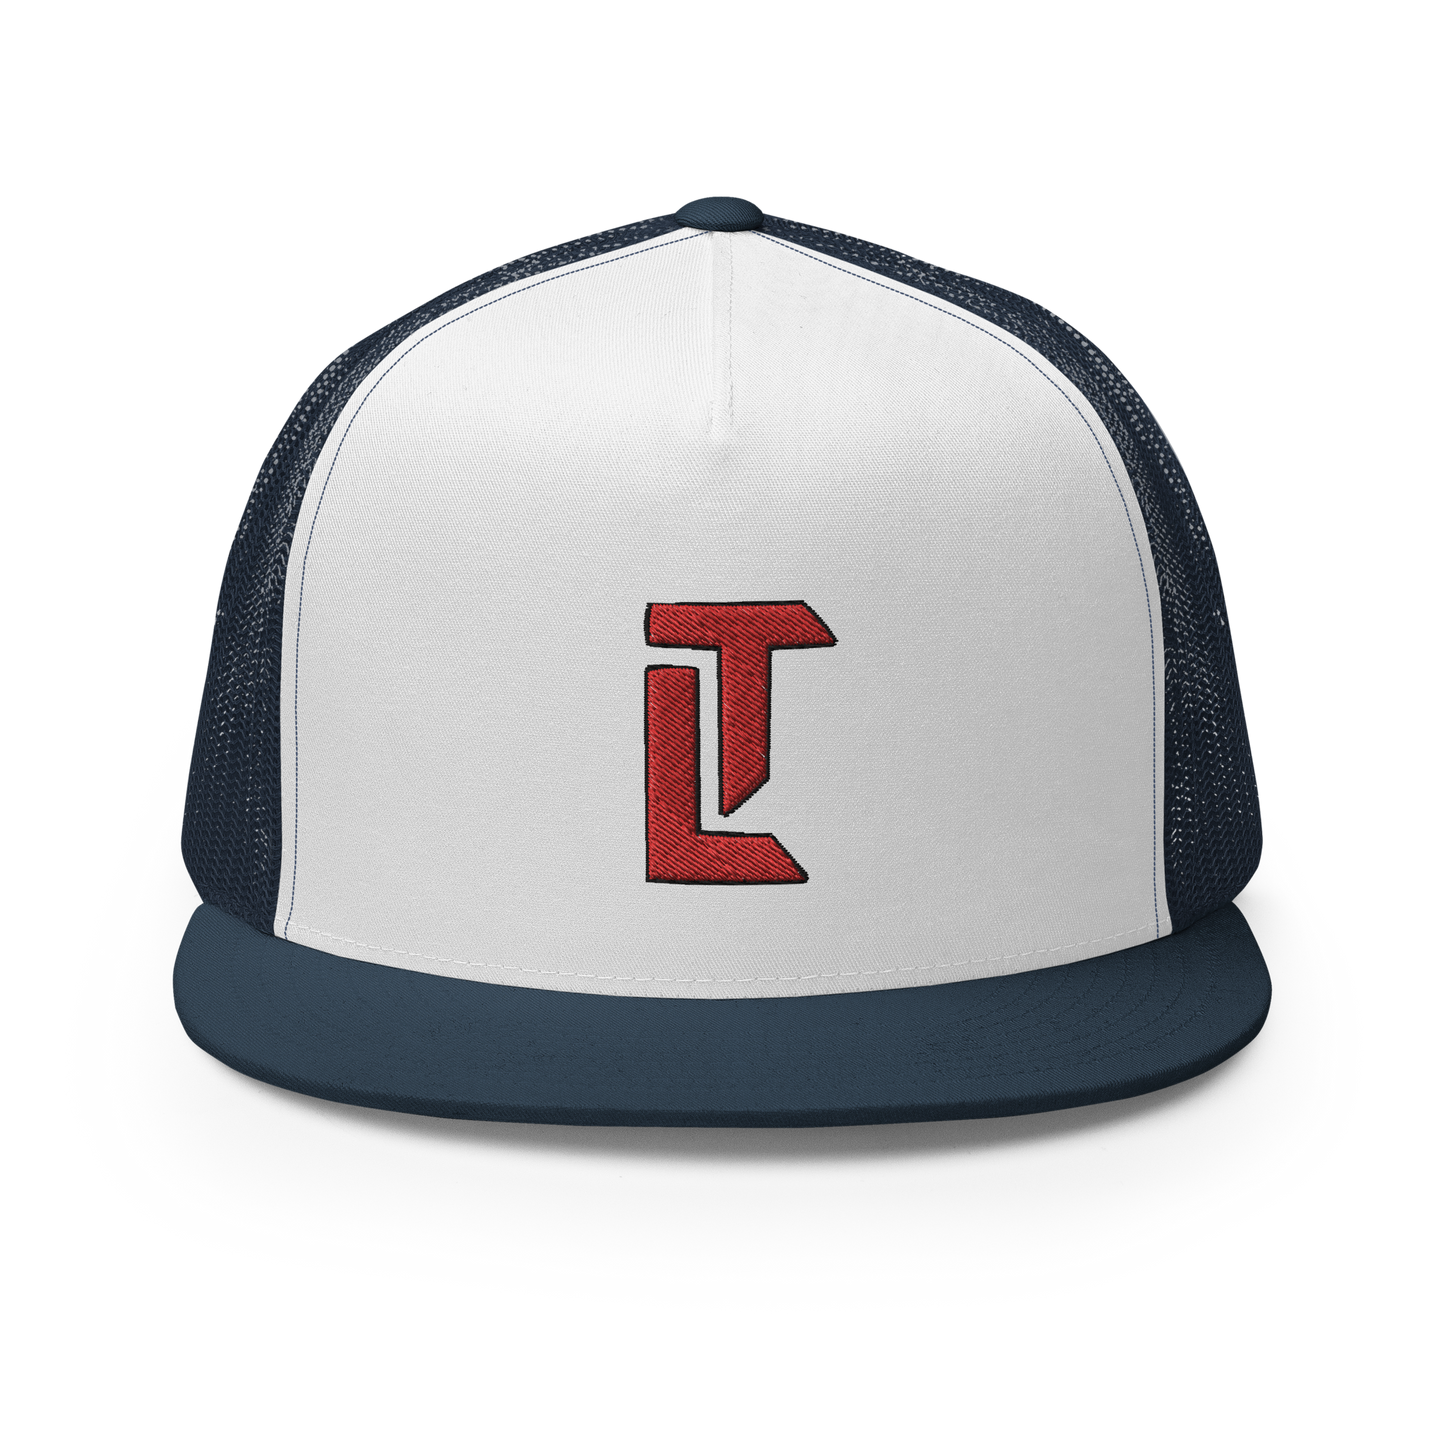 LEX THOMAS TRUCKER CAP